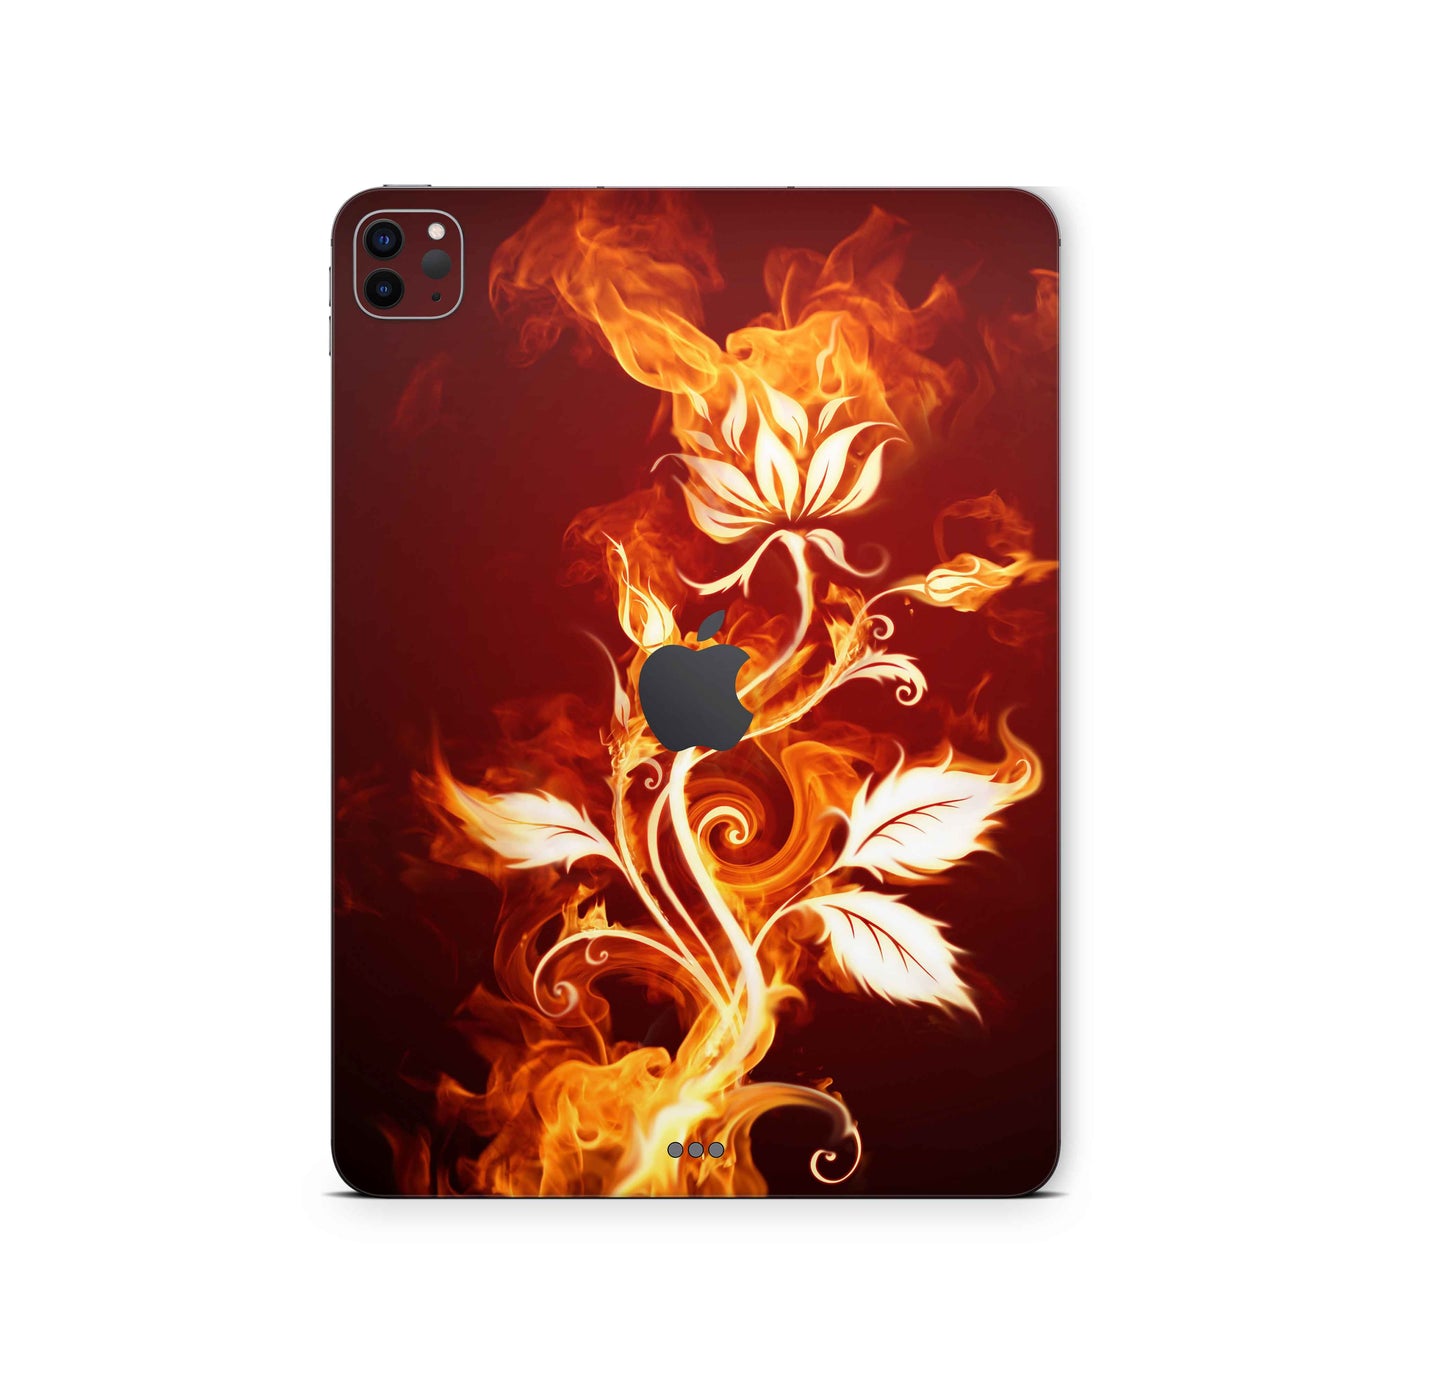 iPad Pro Skin 11" 3.Generation M1 2021 Design Cover Folie Vinyl Skins & Wraps Aufkleber Skins4u Flower-of-fire  